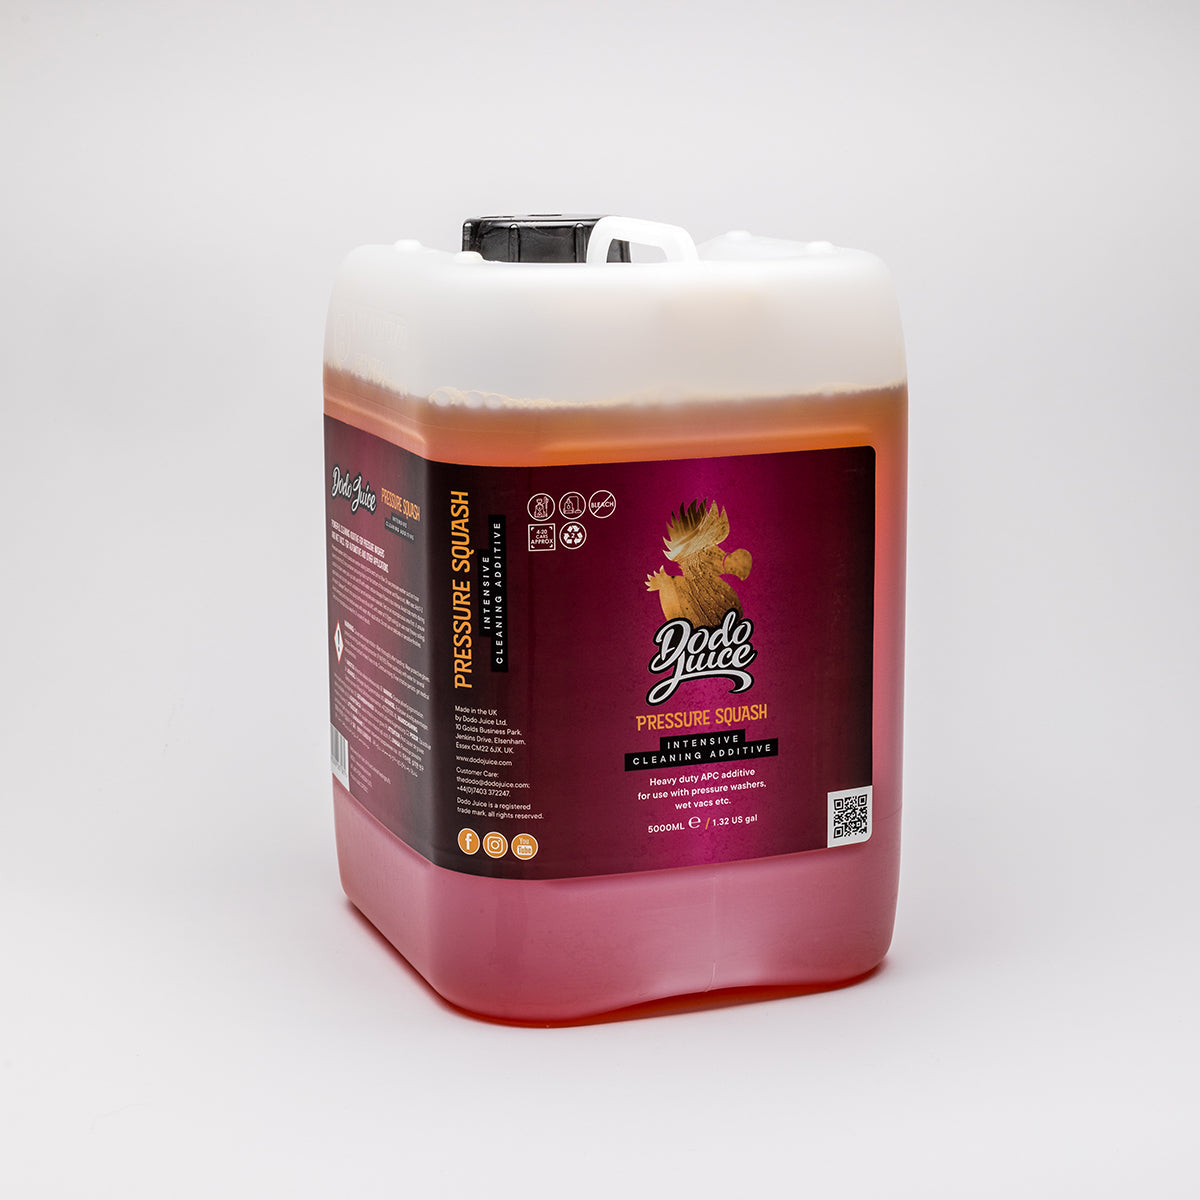 Pressure Squash 5 litres - Jet-wash Detergent/Additive (improves pressure washer cleaning performance) HS 3405300000